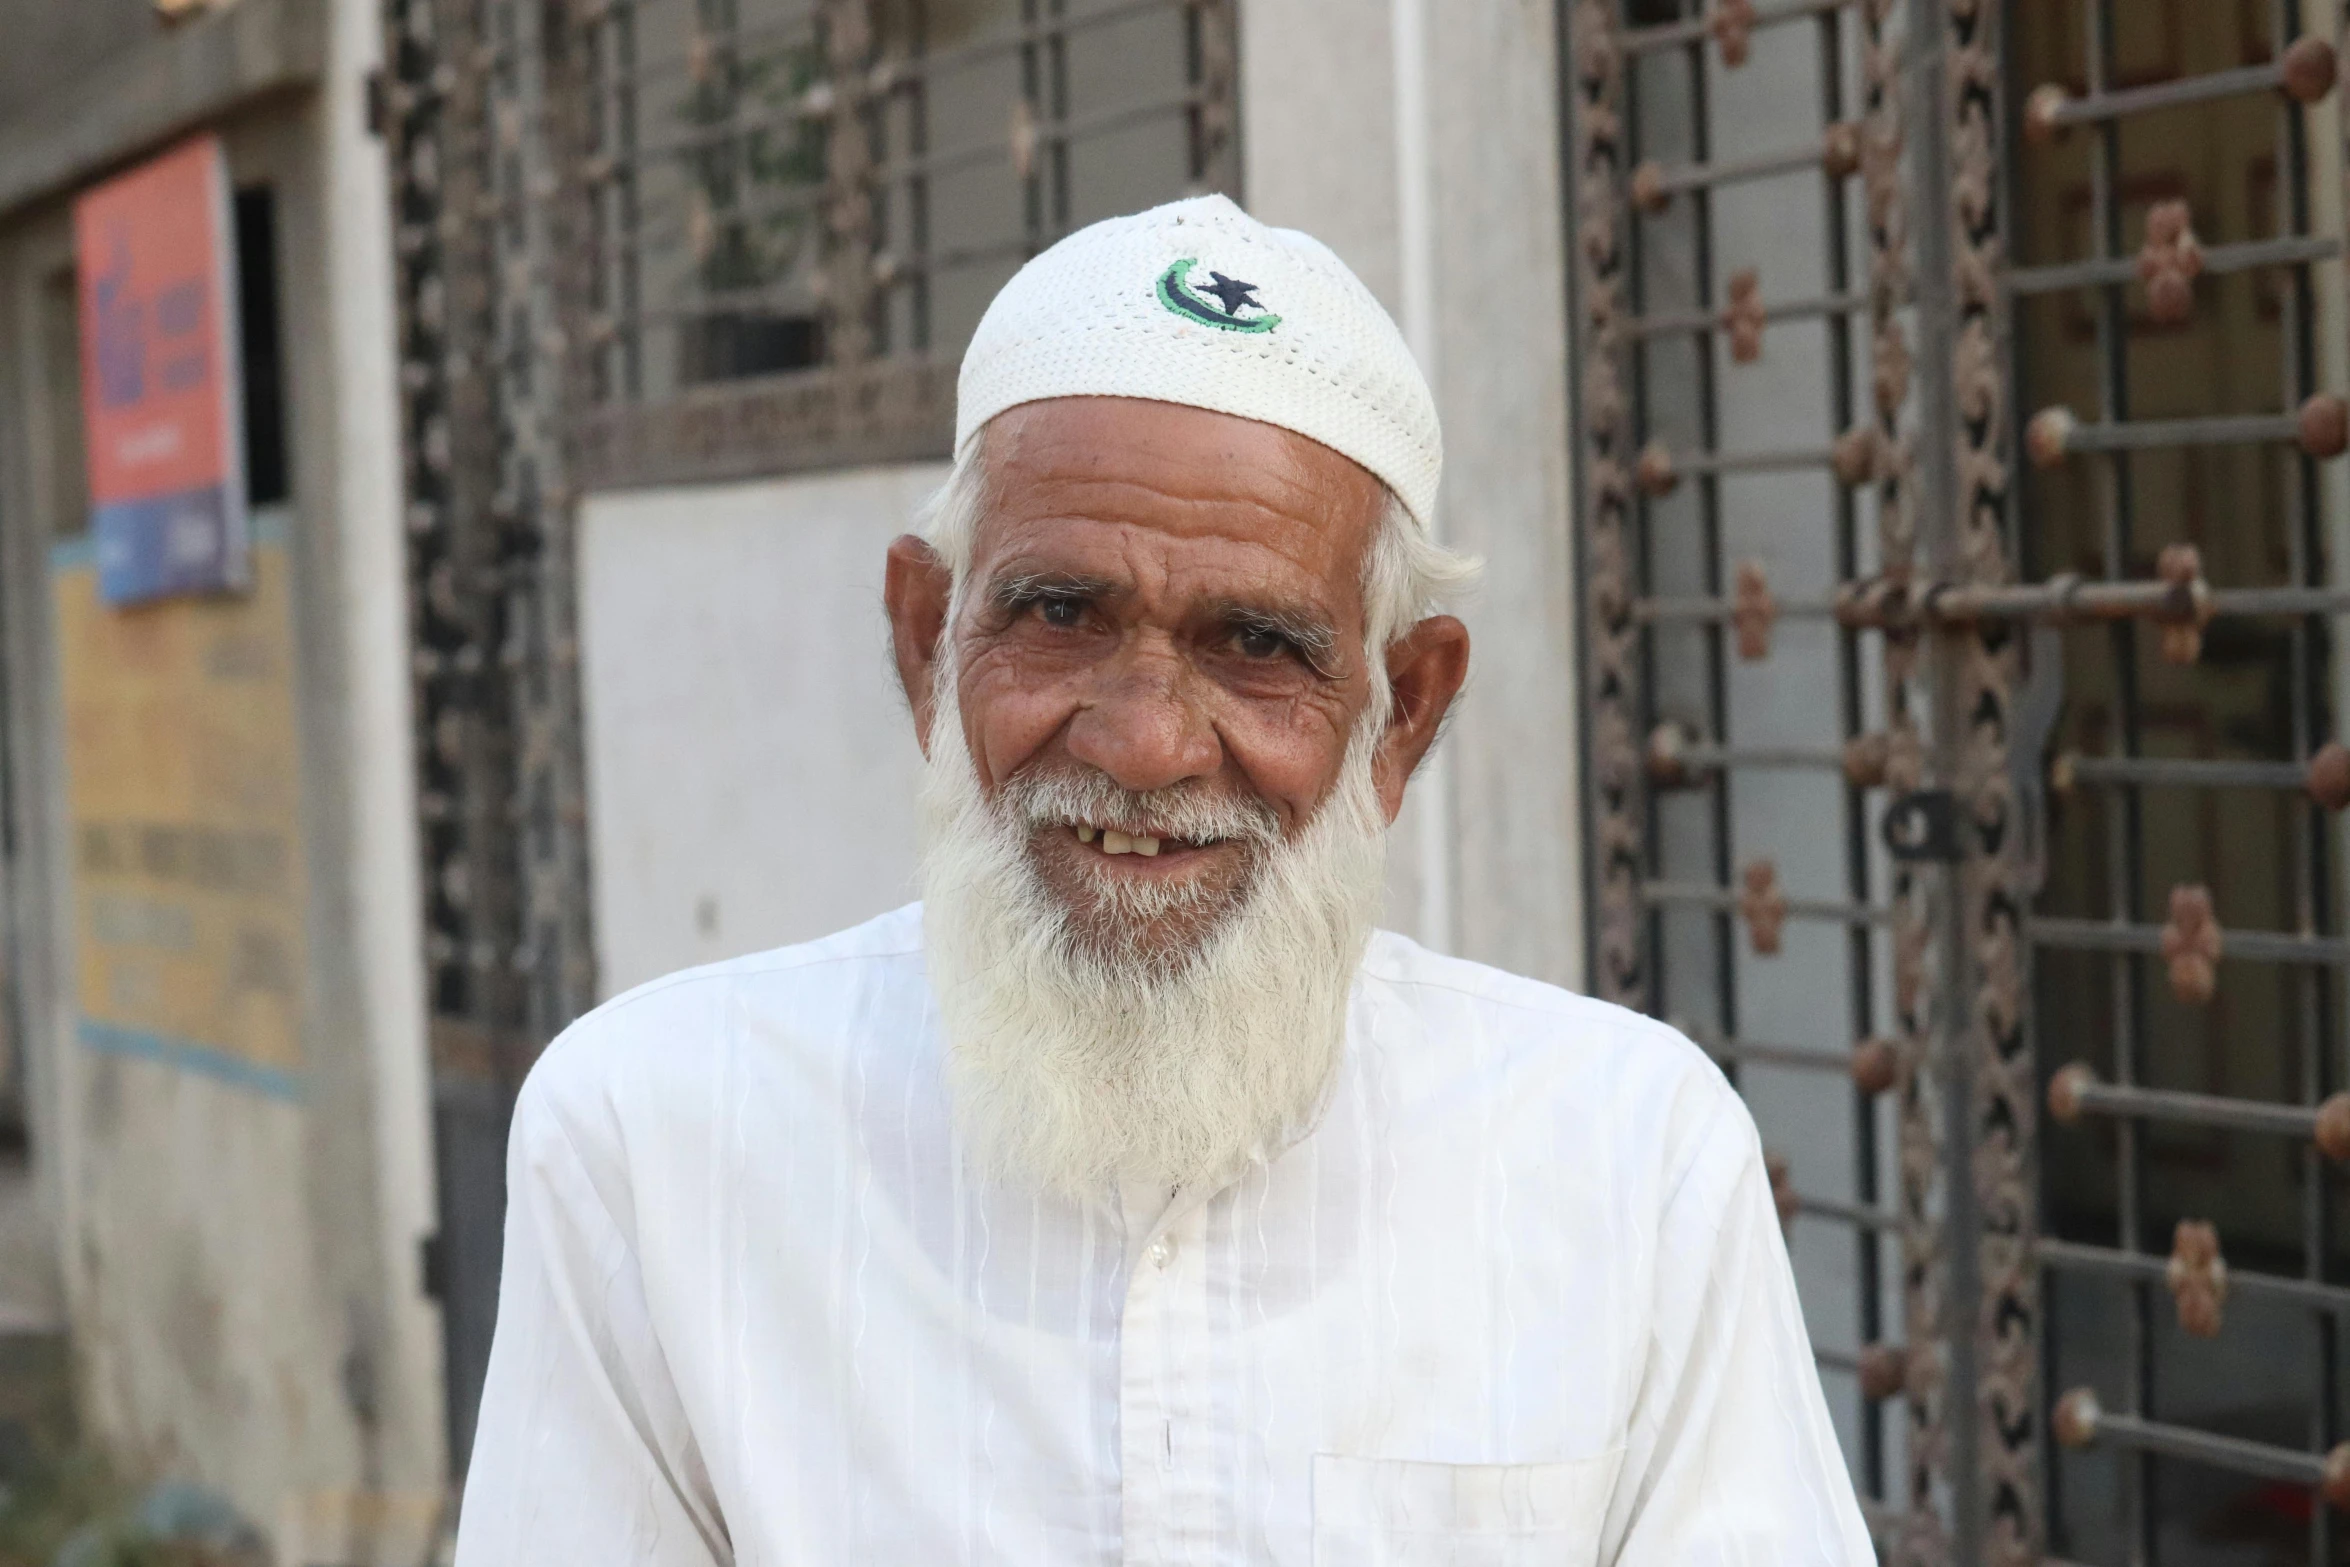 man with white beard, wearing a long white cap